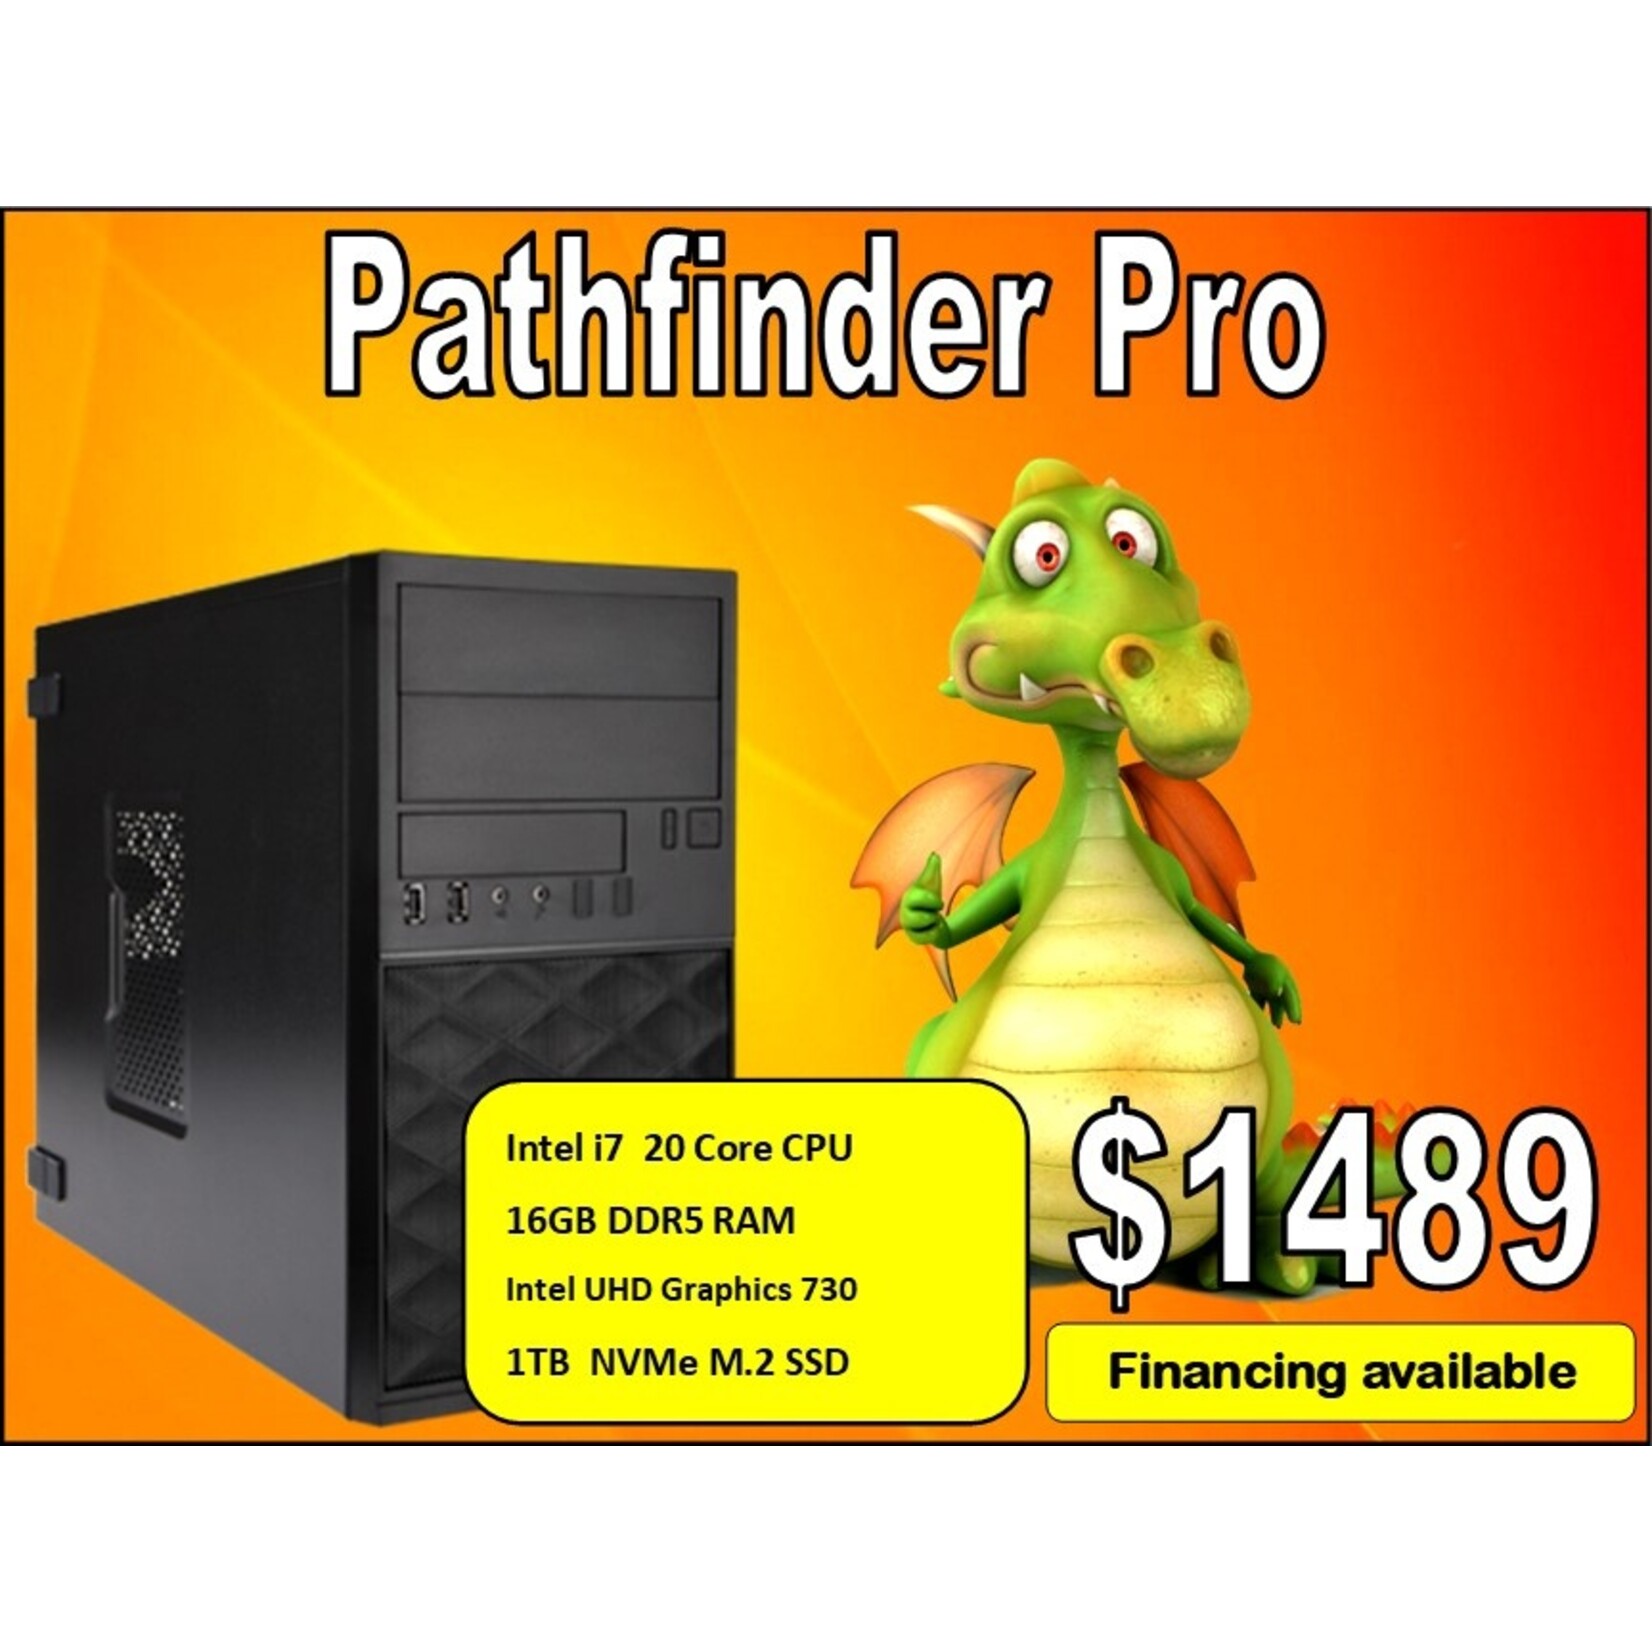 Pathfinder Pro